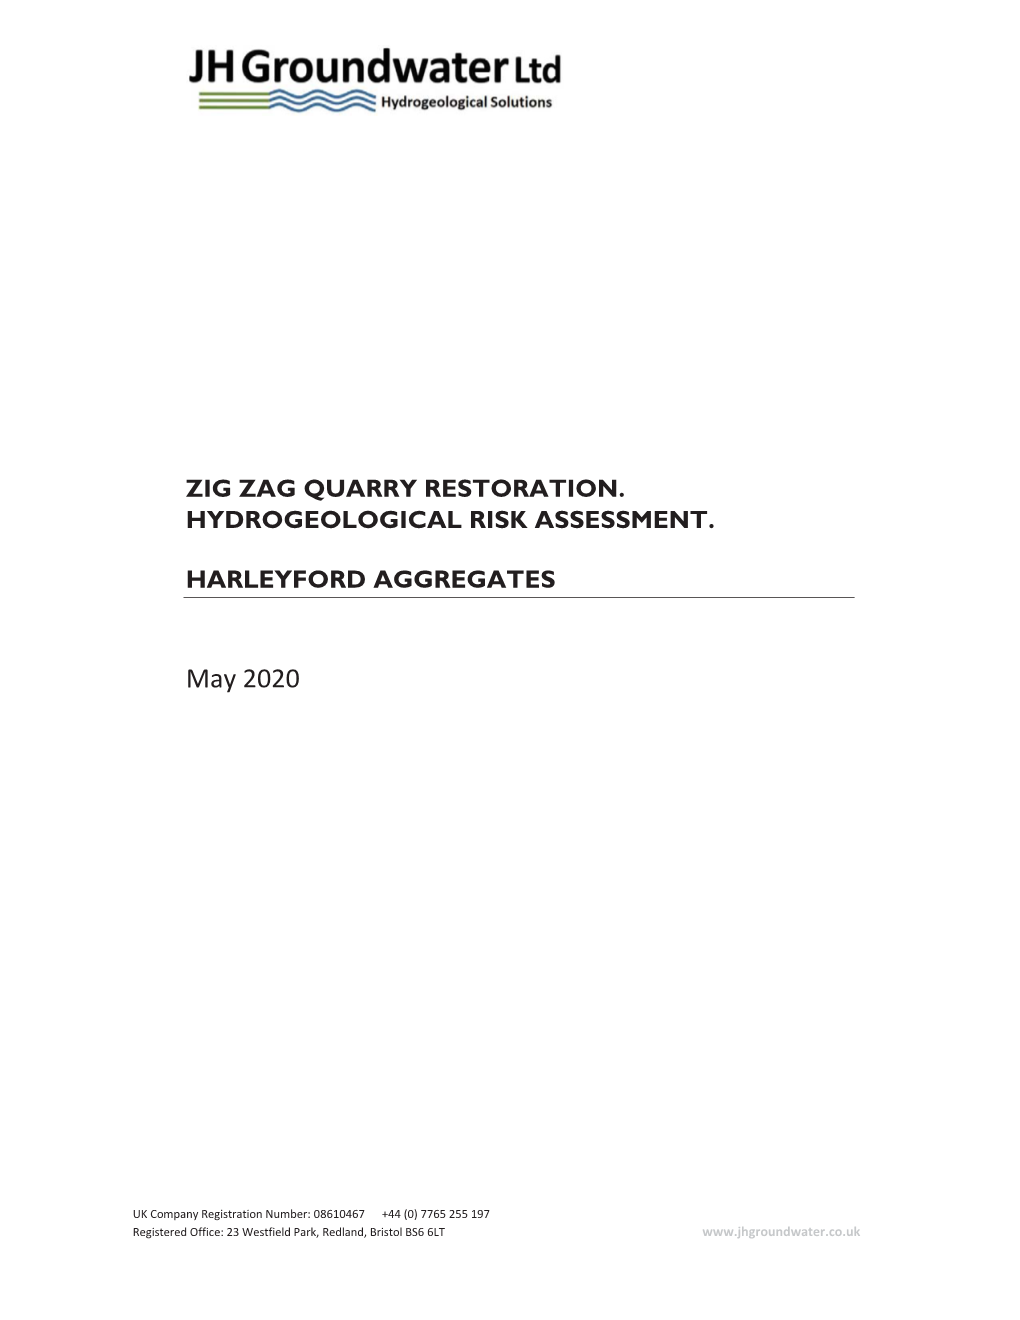 Zig Zag Quarry Restoration. Hydrogeological Risk Assessment